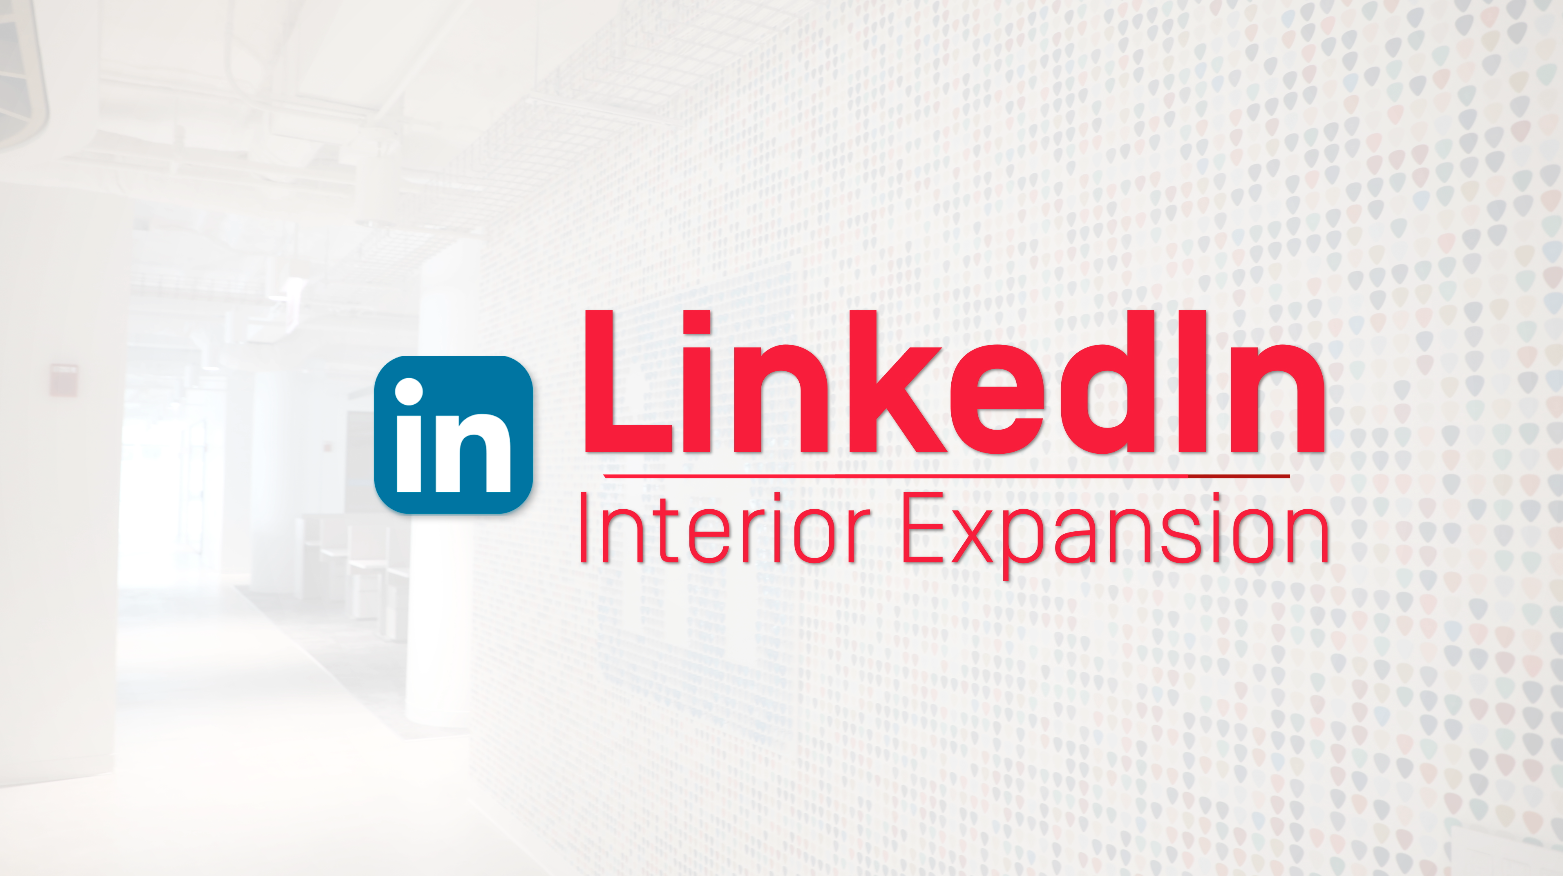 LinkedIn – Interior Expansion